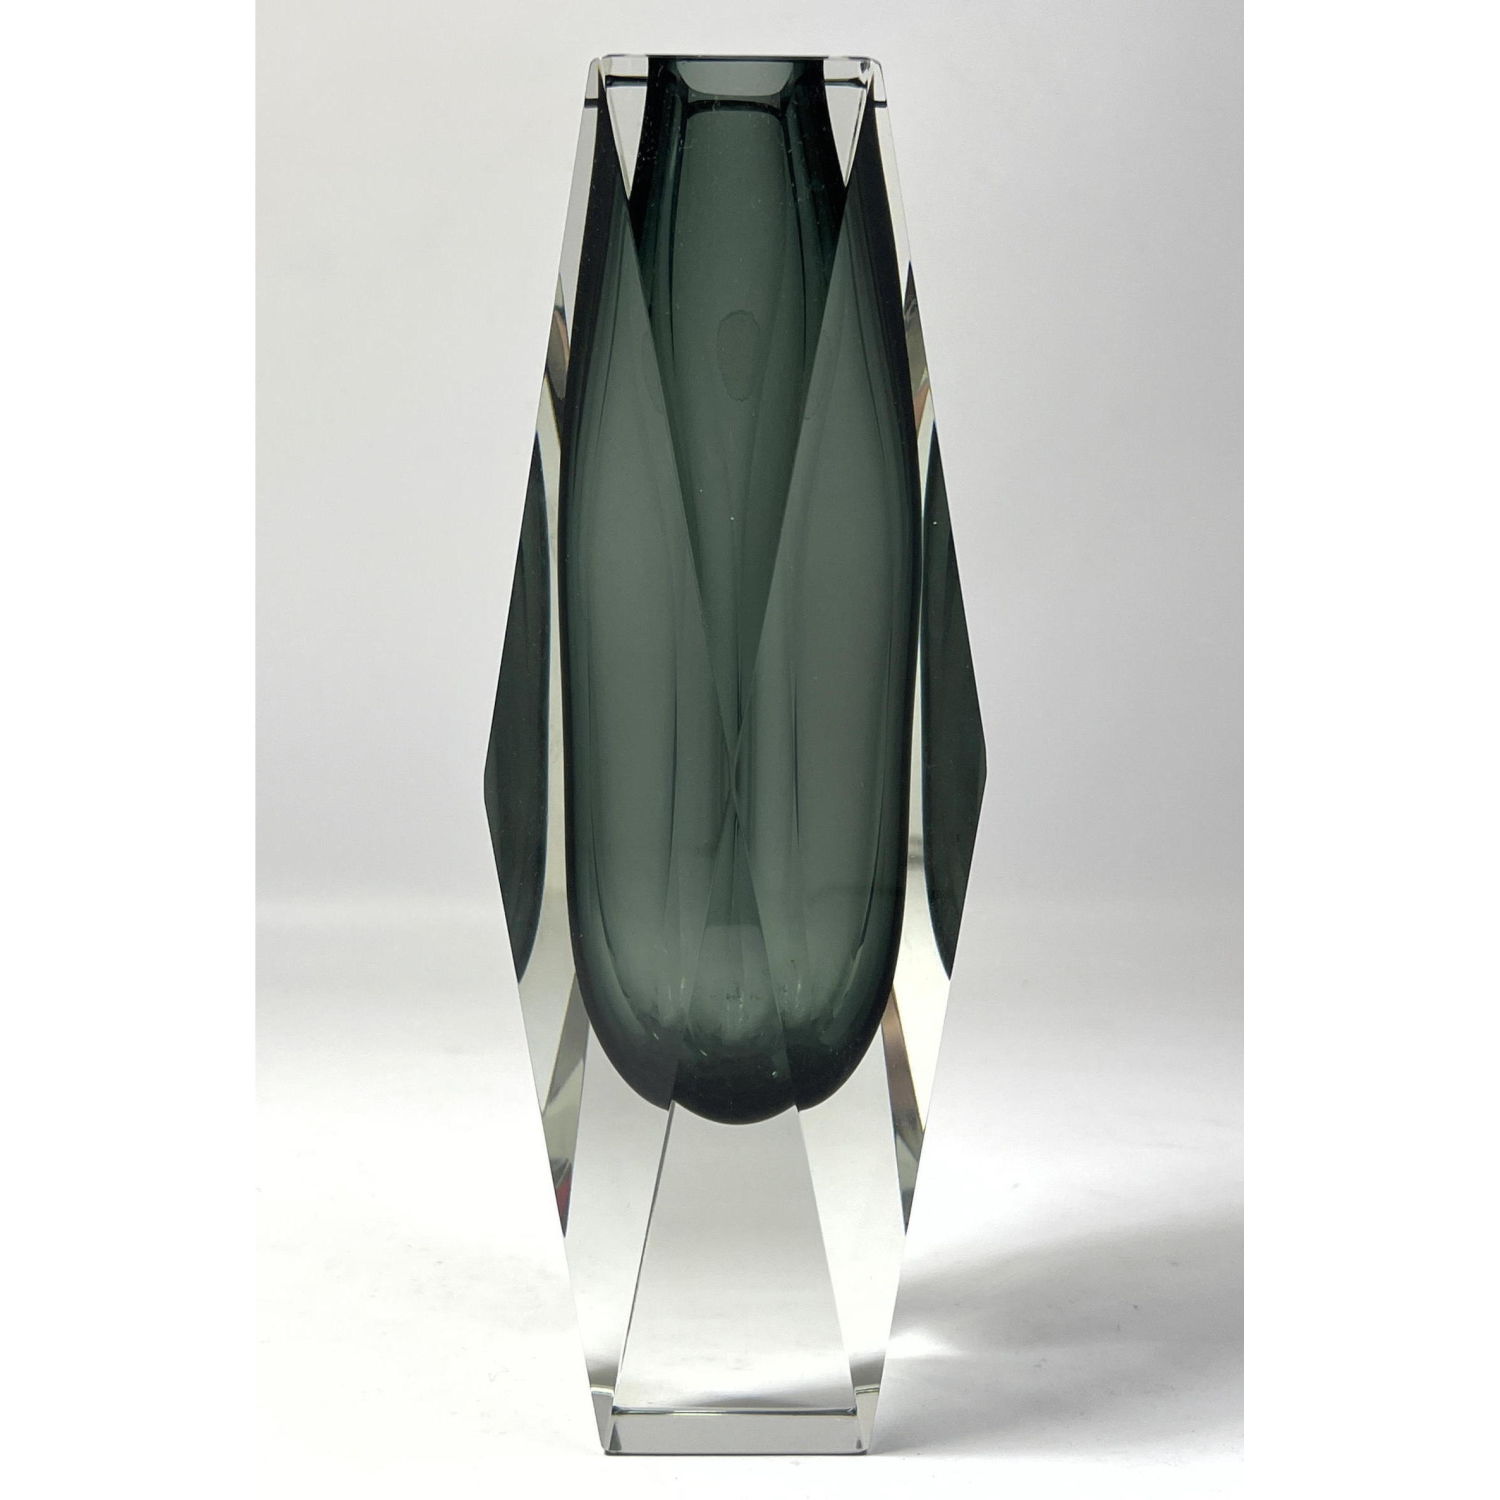 Murano Cased Art Glass Vase. Unmarked.